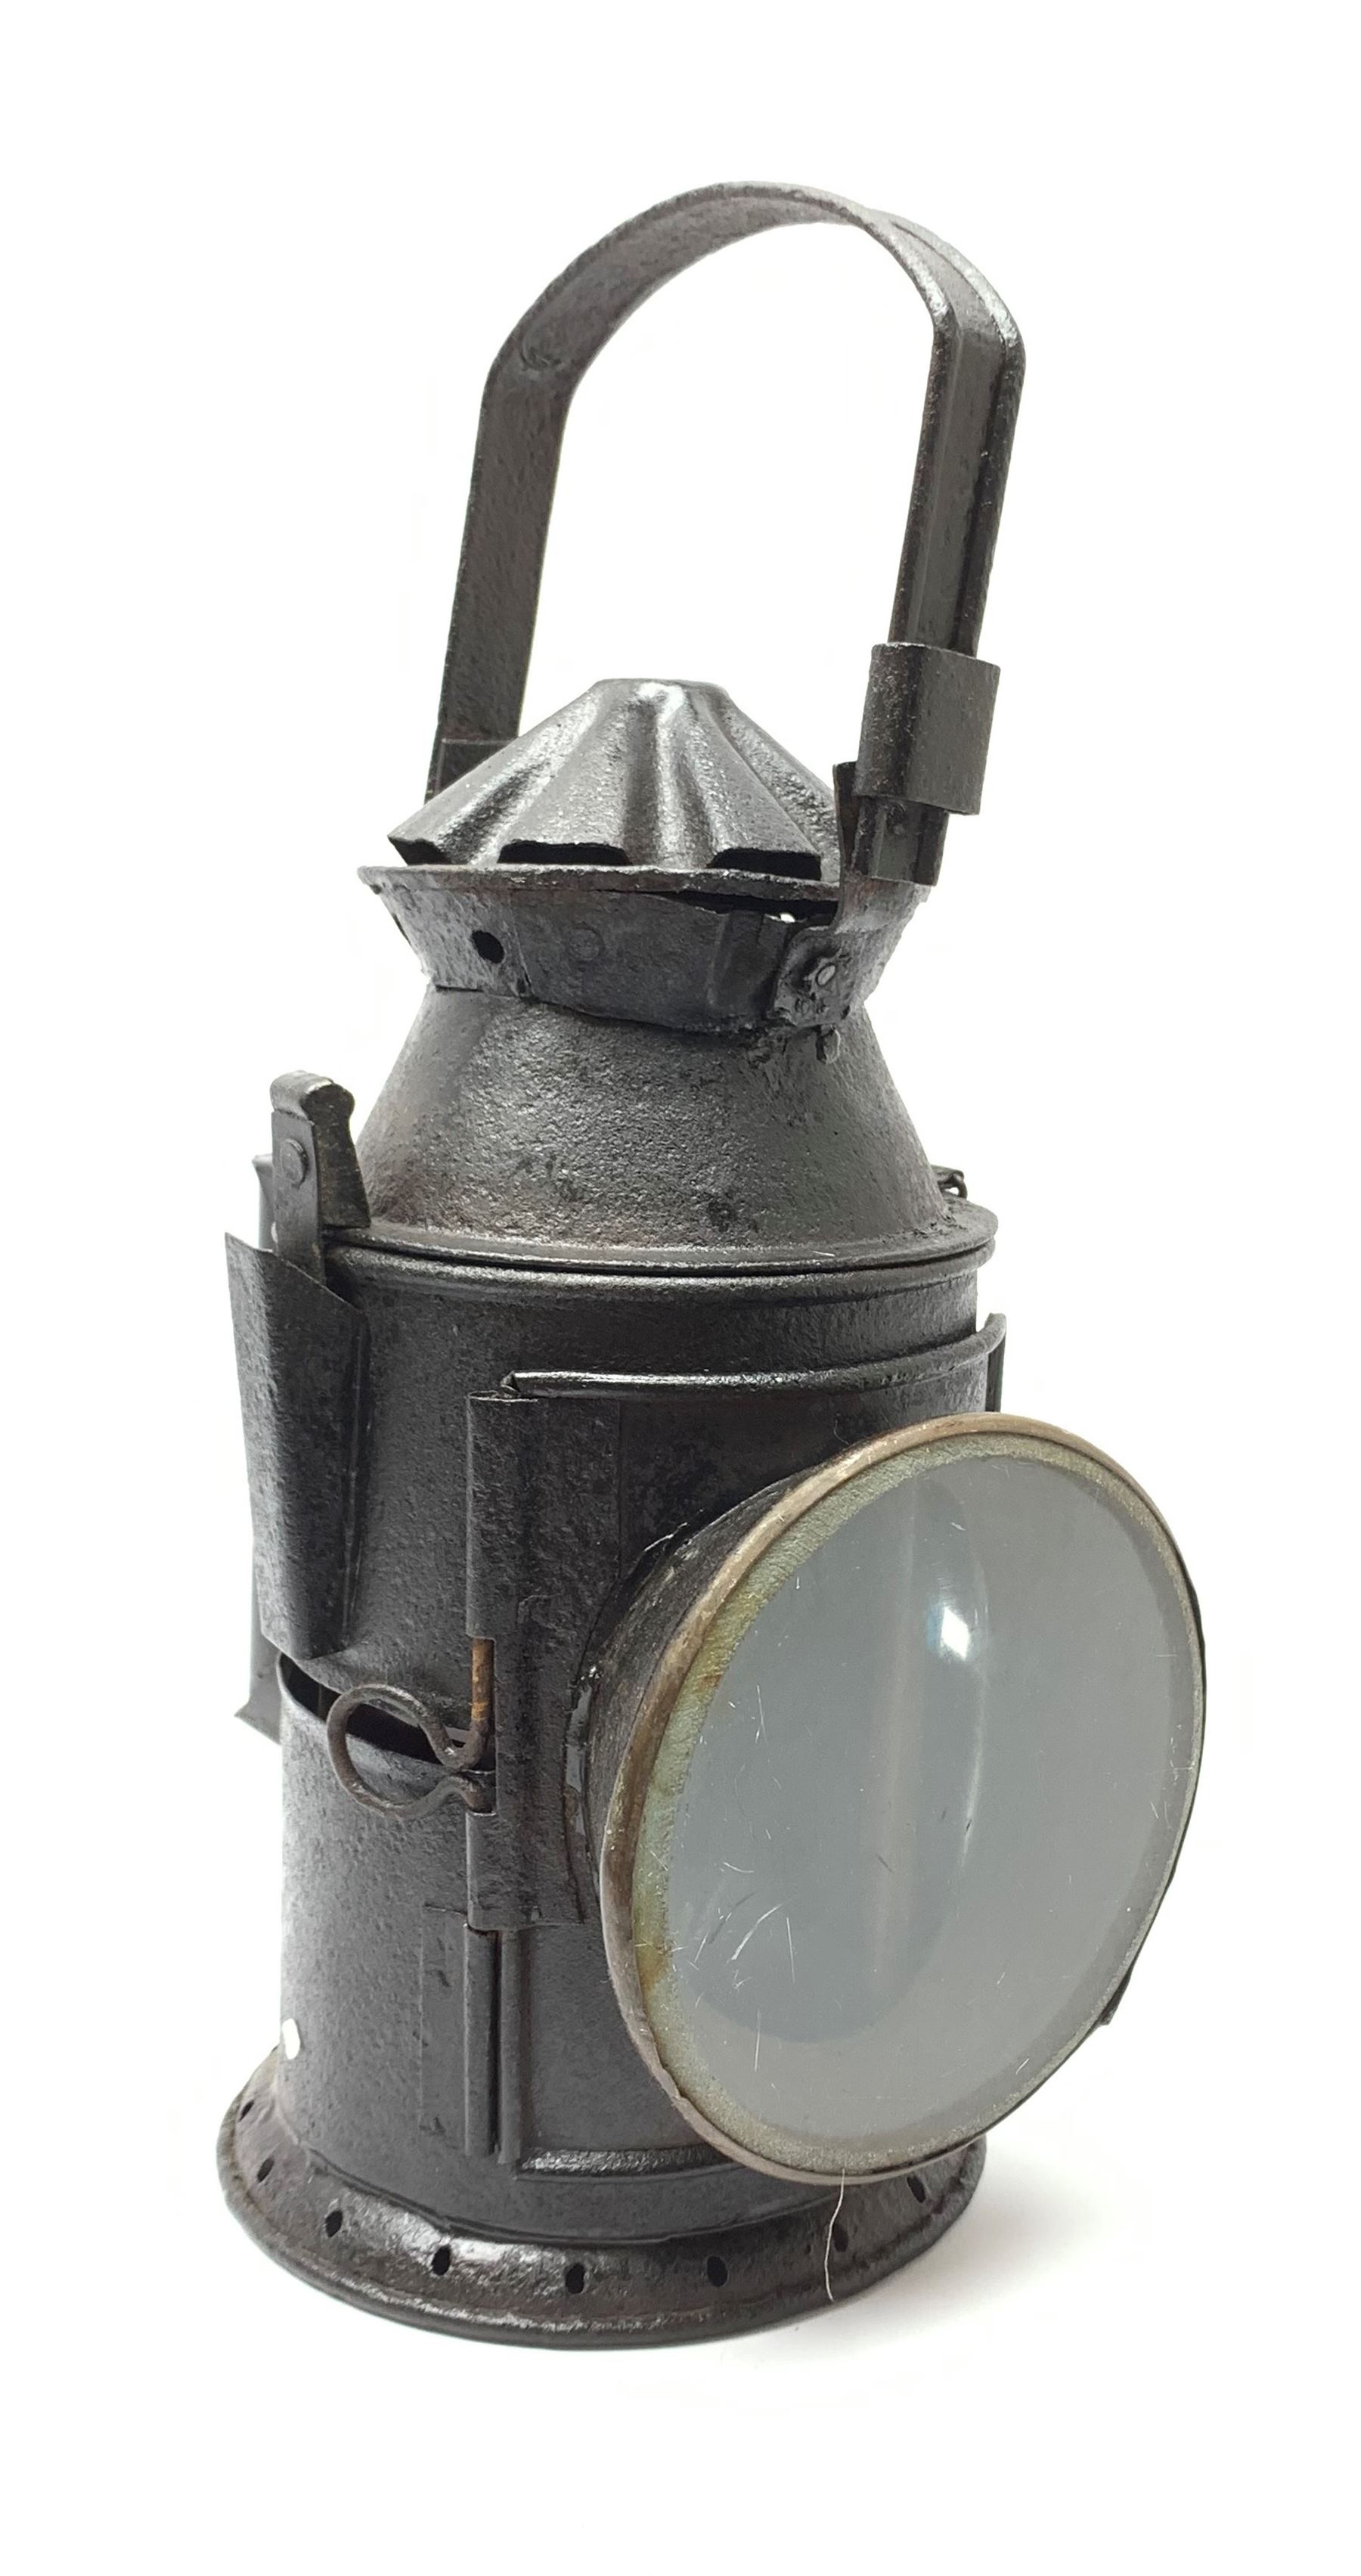 Railway type lantern